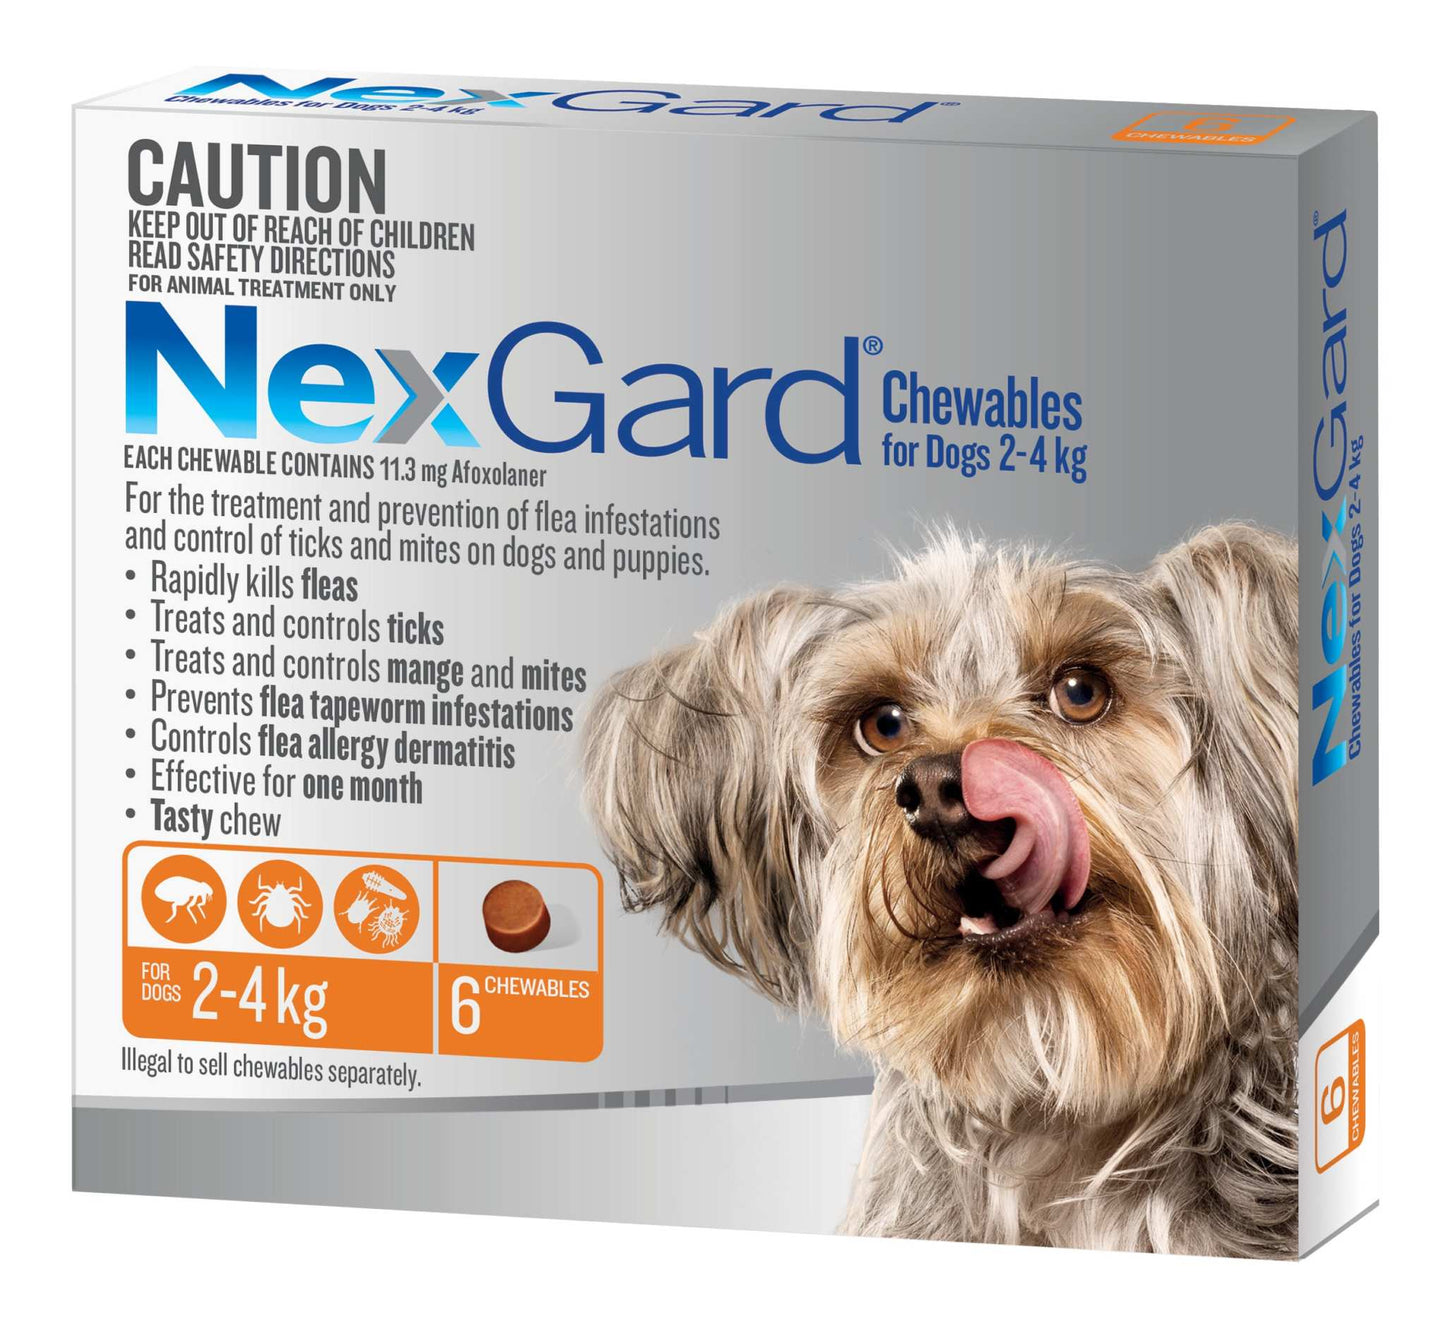 NexGard Chewables for Dogs, 4-10 lbs, (Orange)